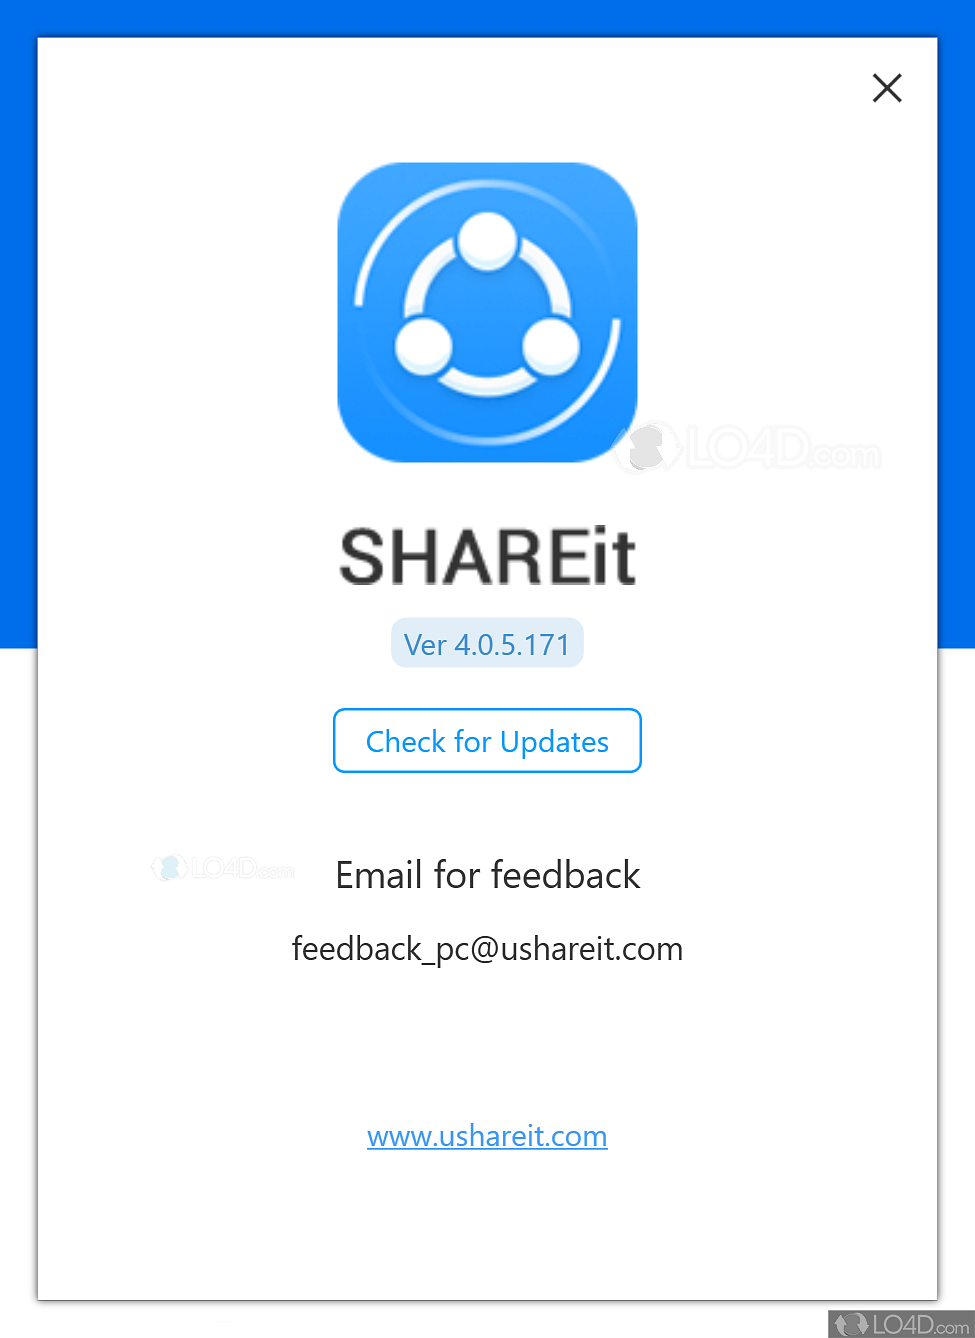 shareit web